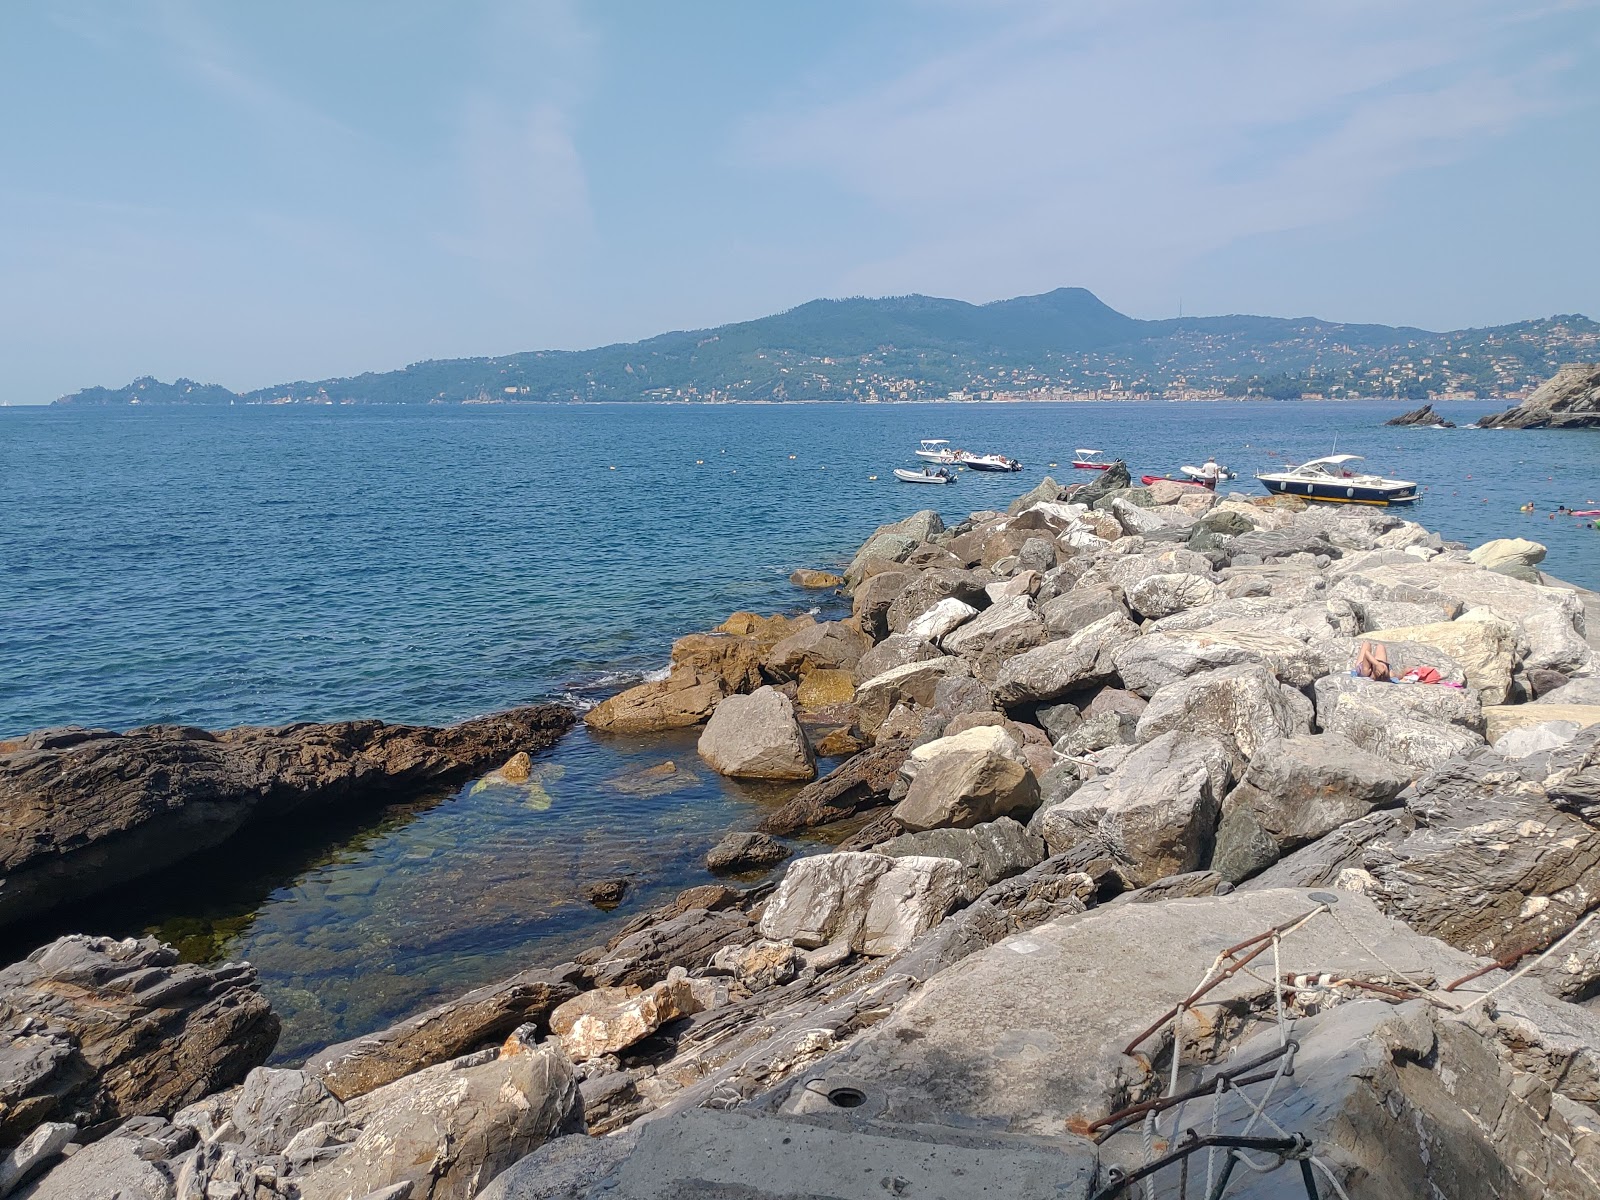 Fotografie cu Pozzetto Spiaggia cu nivelul de curățenie in medie